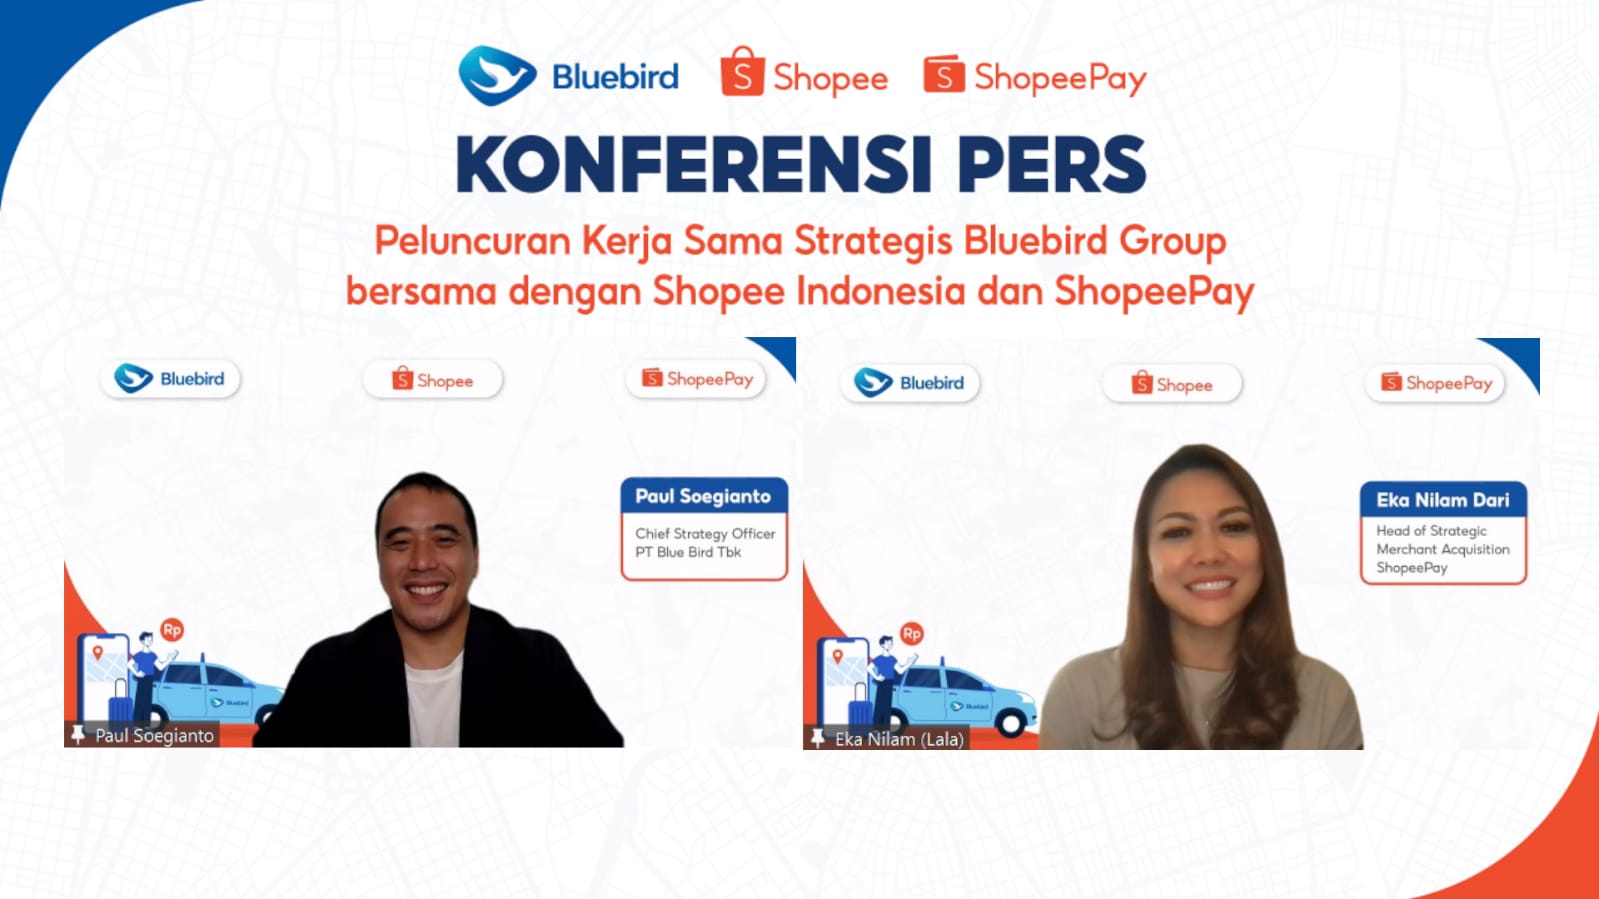 Berangkat Aman, Belanja Nyaman dengan Bluebird Group, Shopee Indonesia, dan ShopeePay